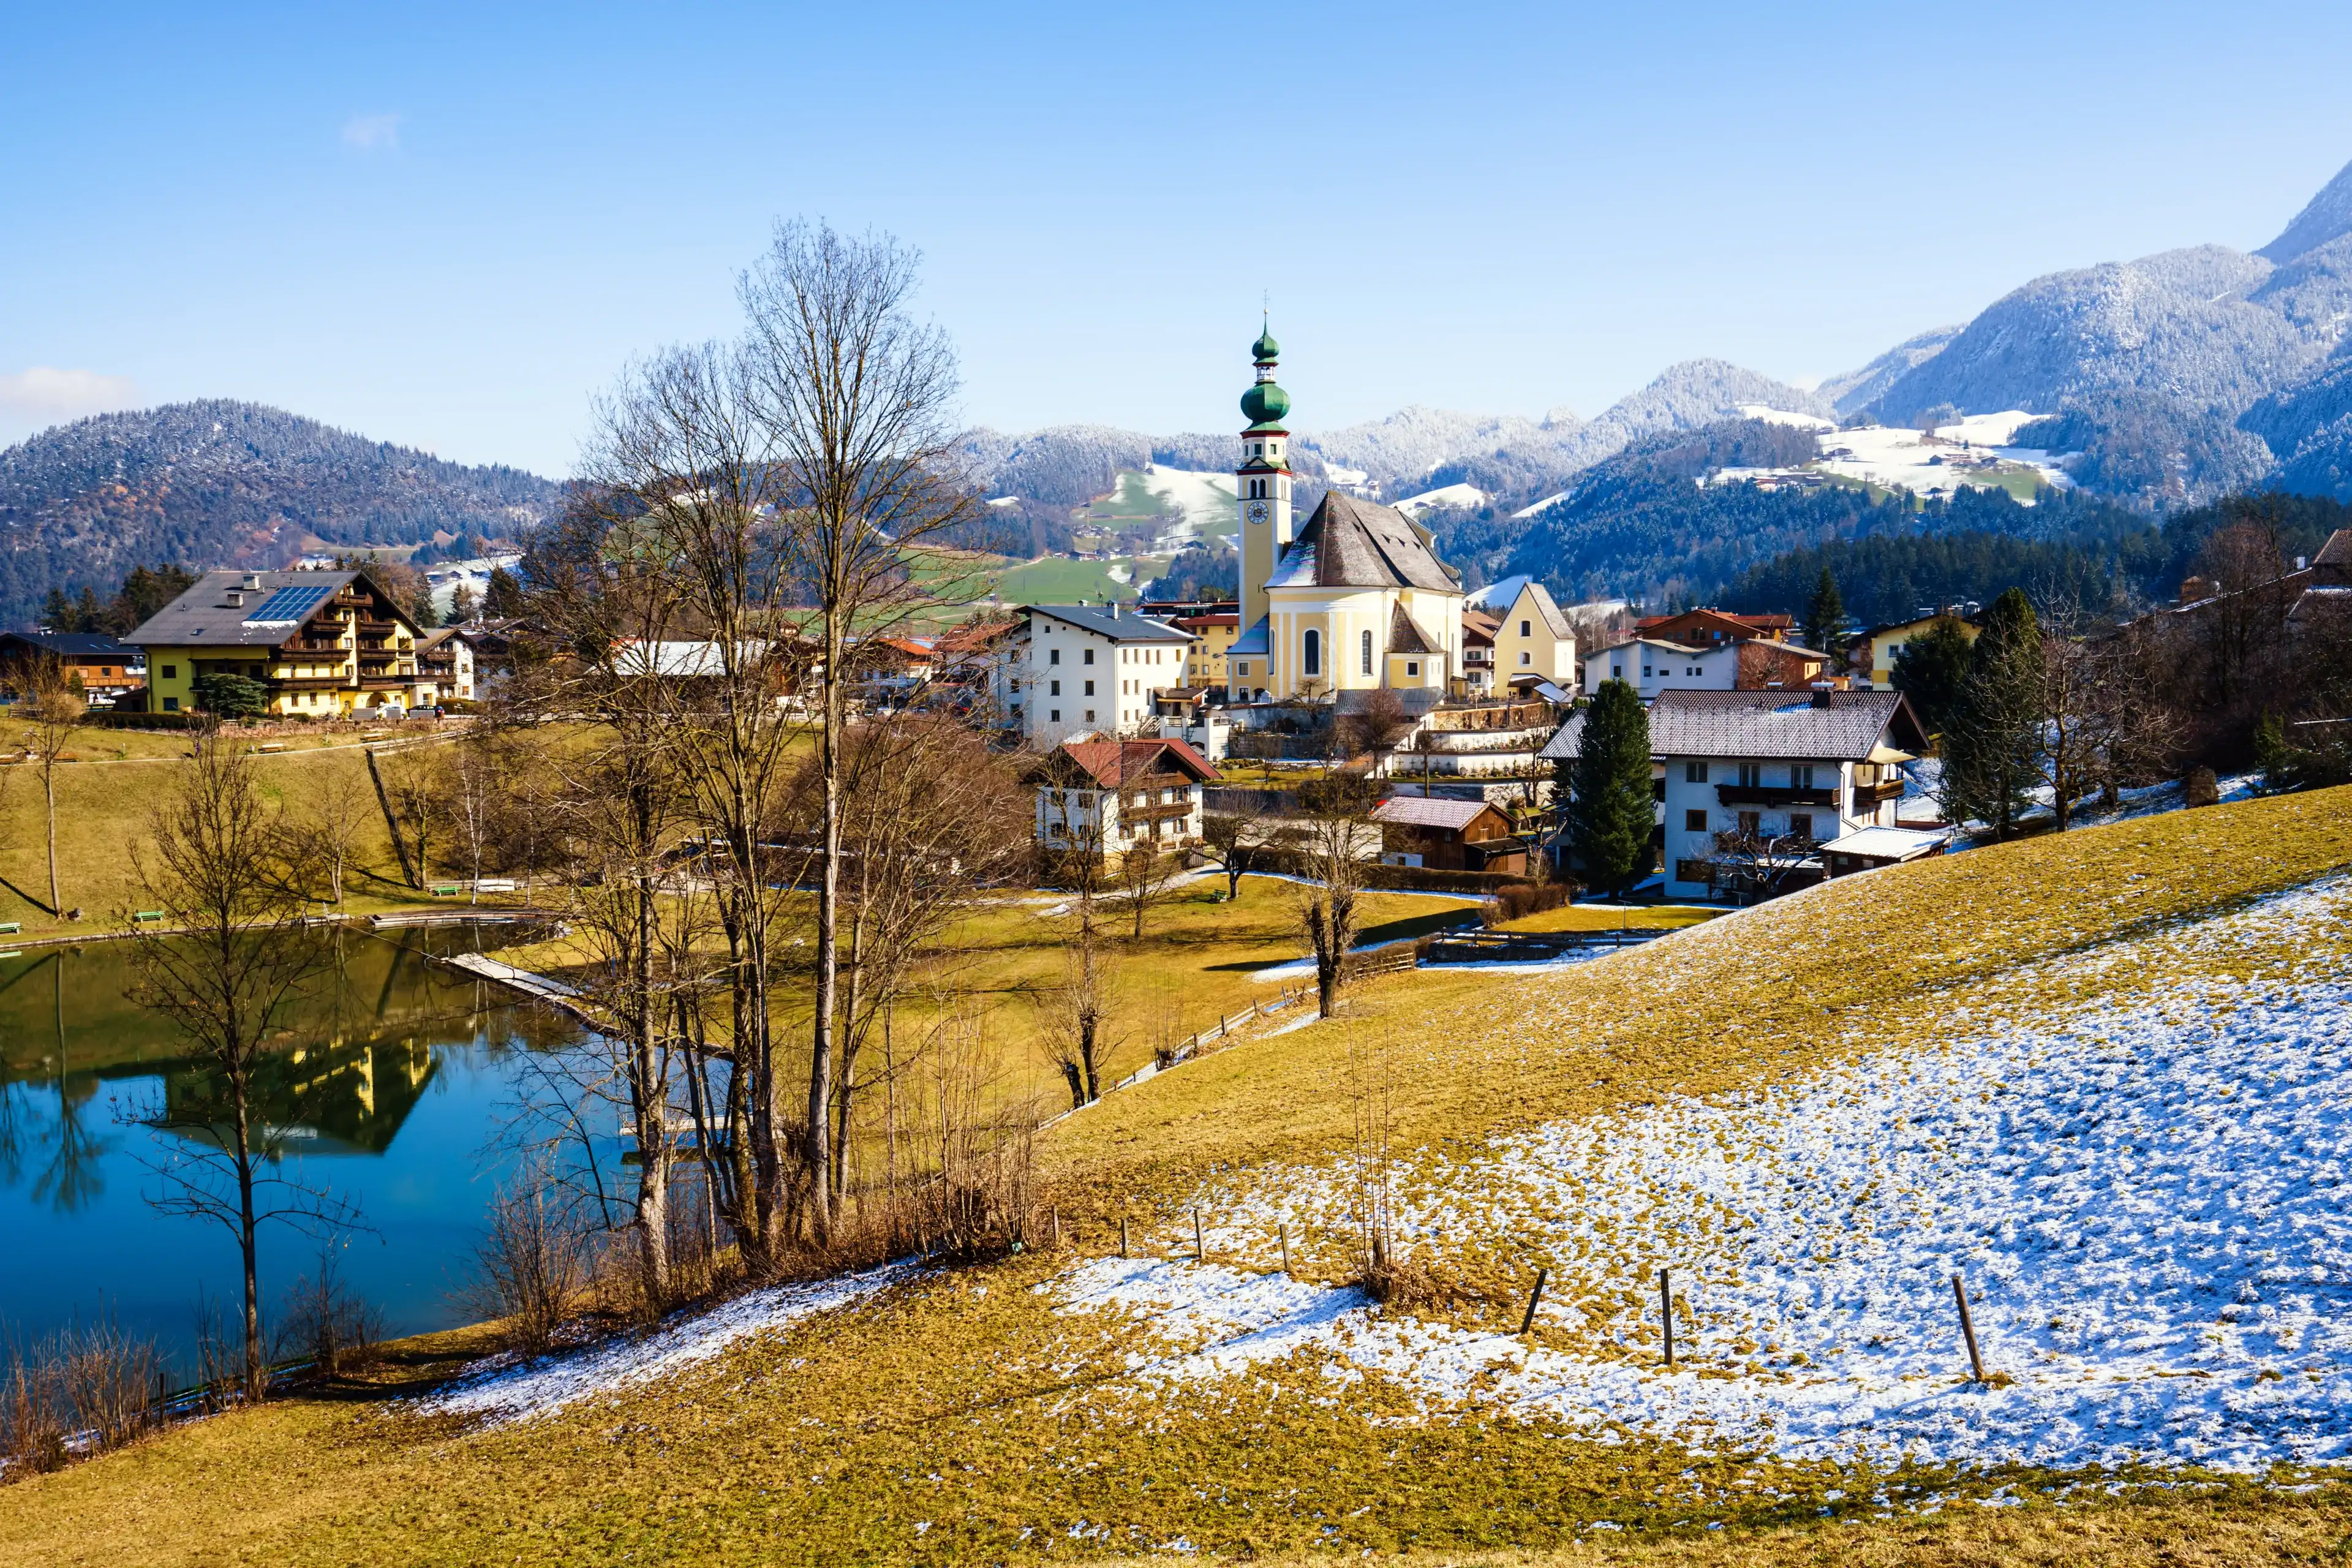 Best Reith im Alpbachtal hotels. Cheap hotels in Reith im Alpbachtal, Austria